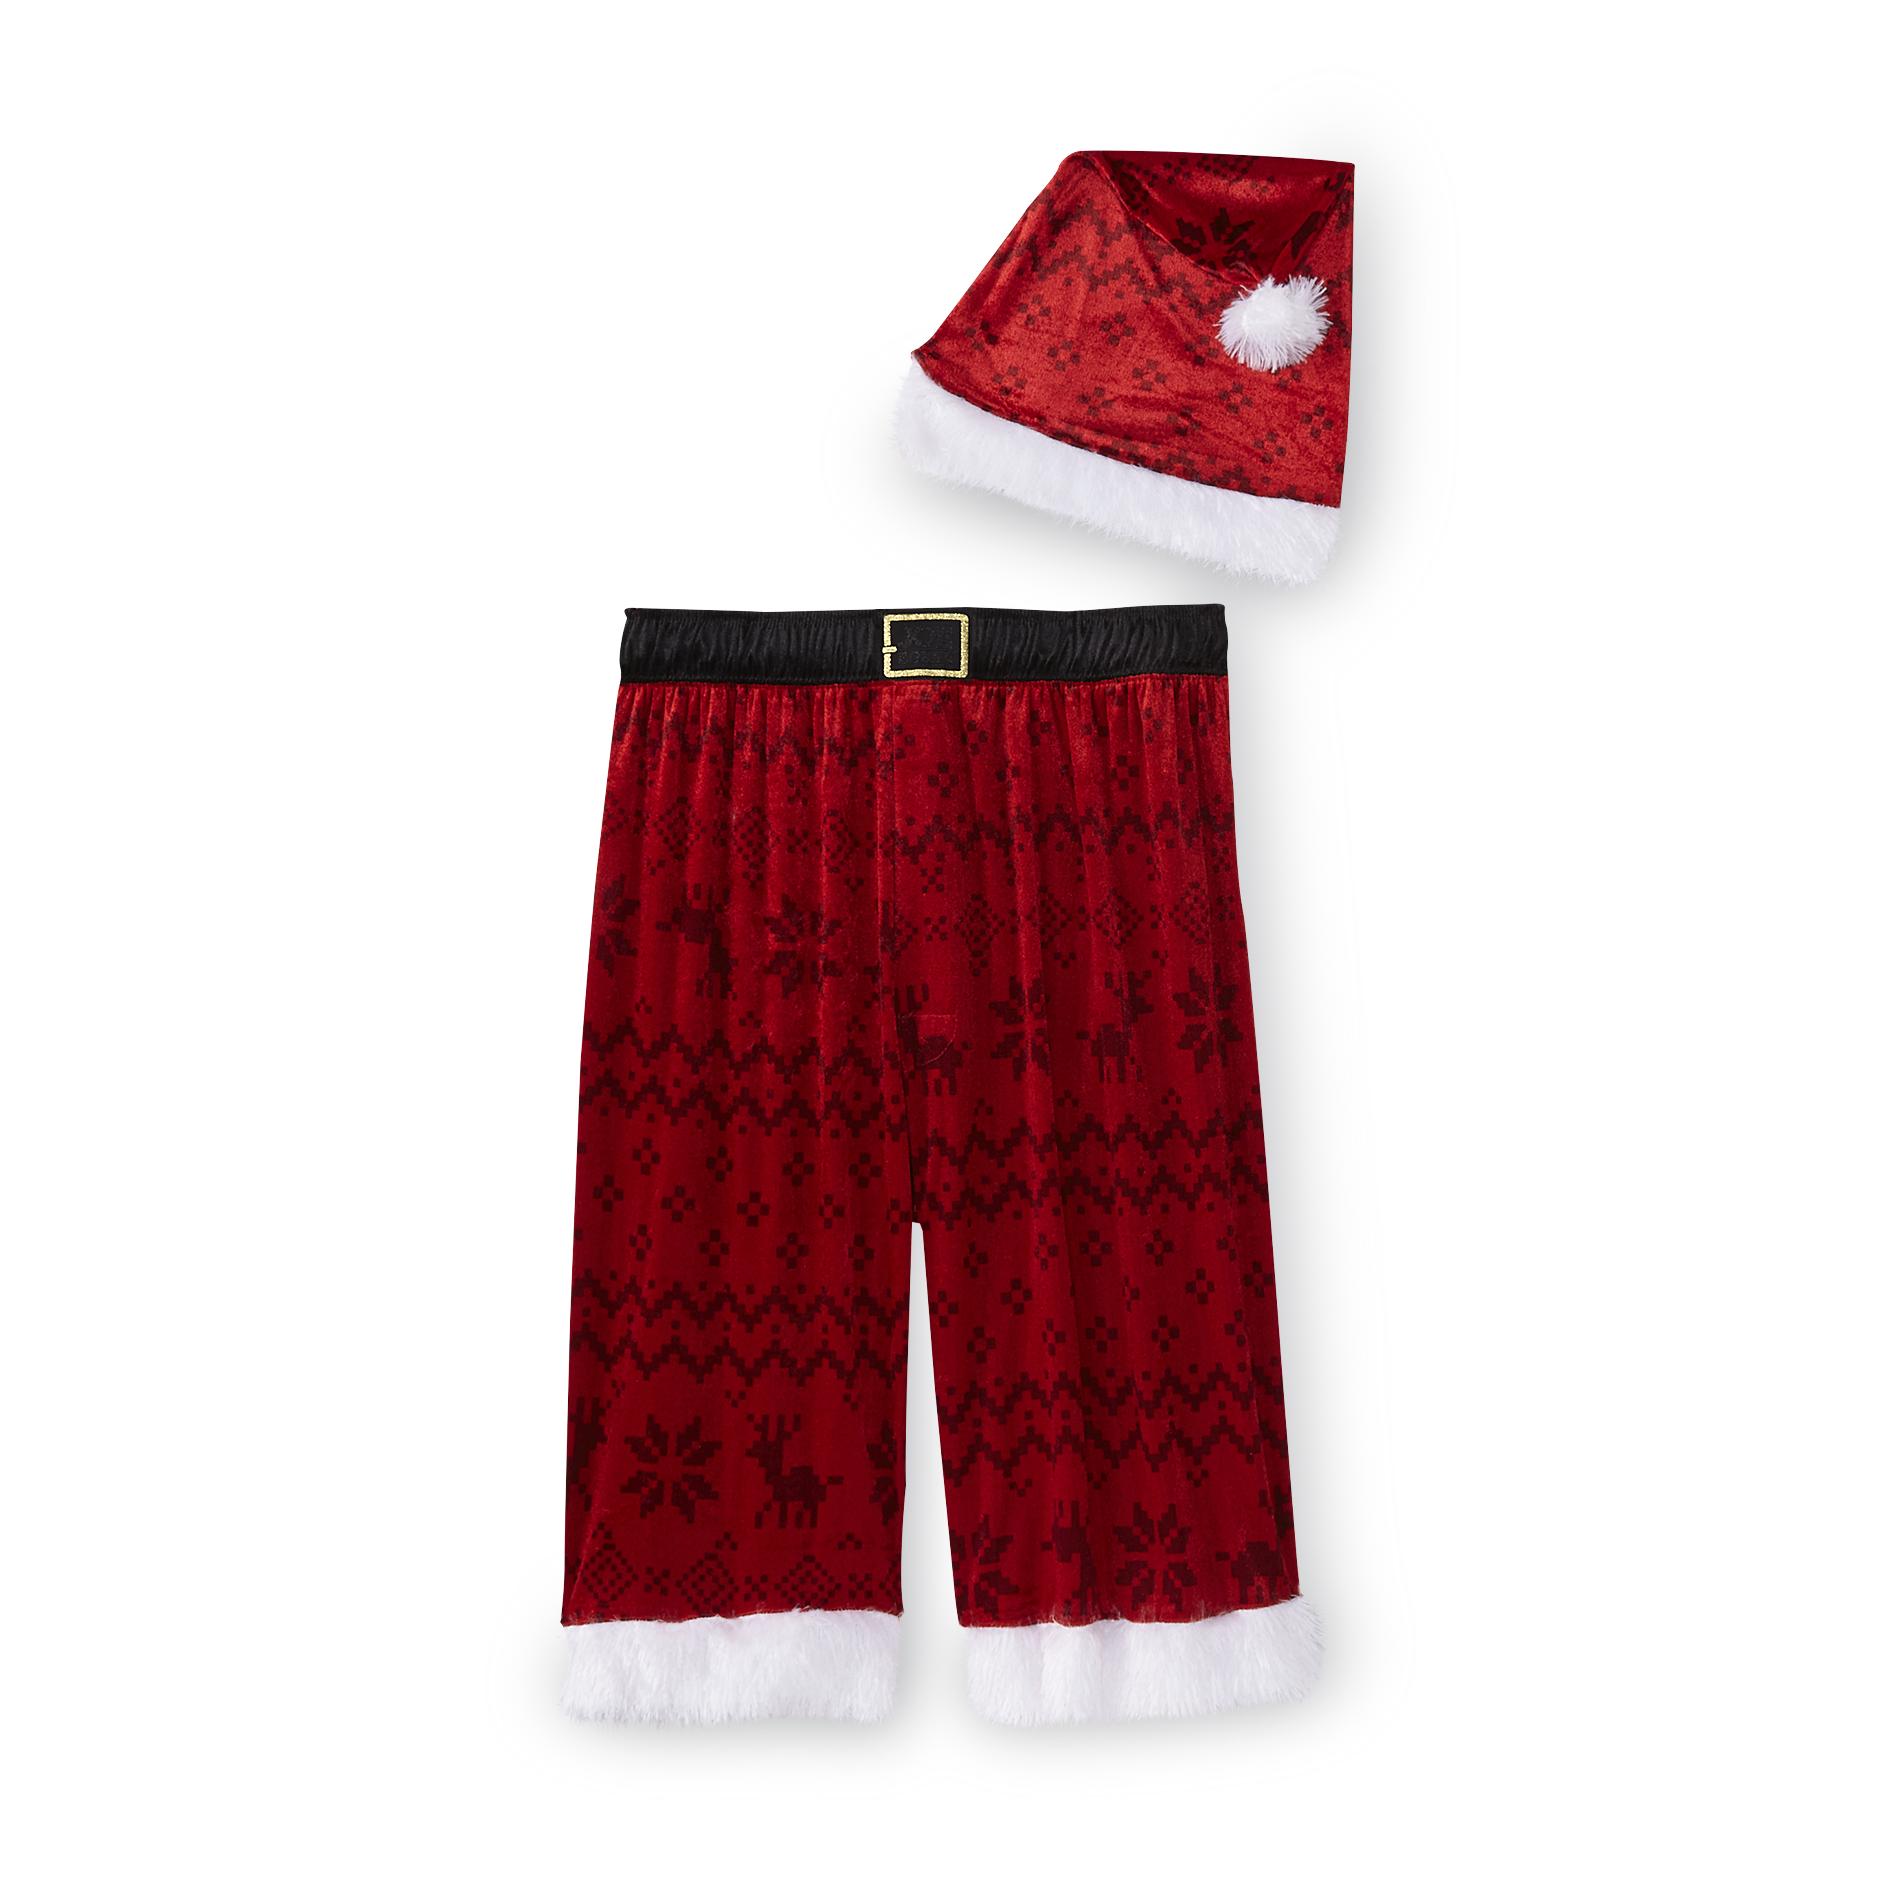 Joe Boxer Men's Christmas Jam Shorts & Santa Claus Hat